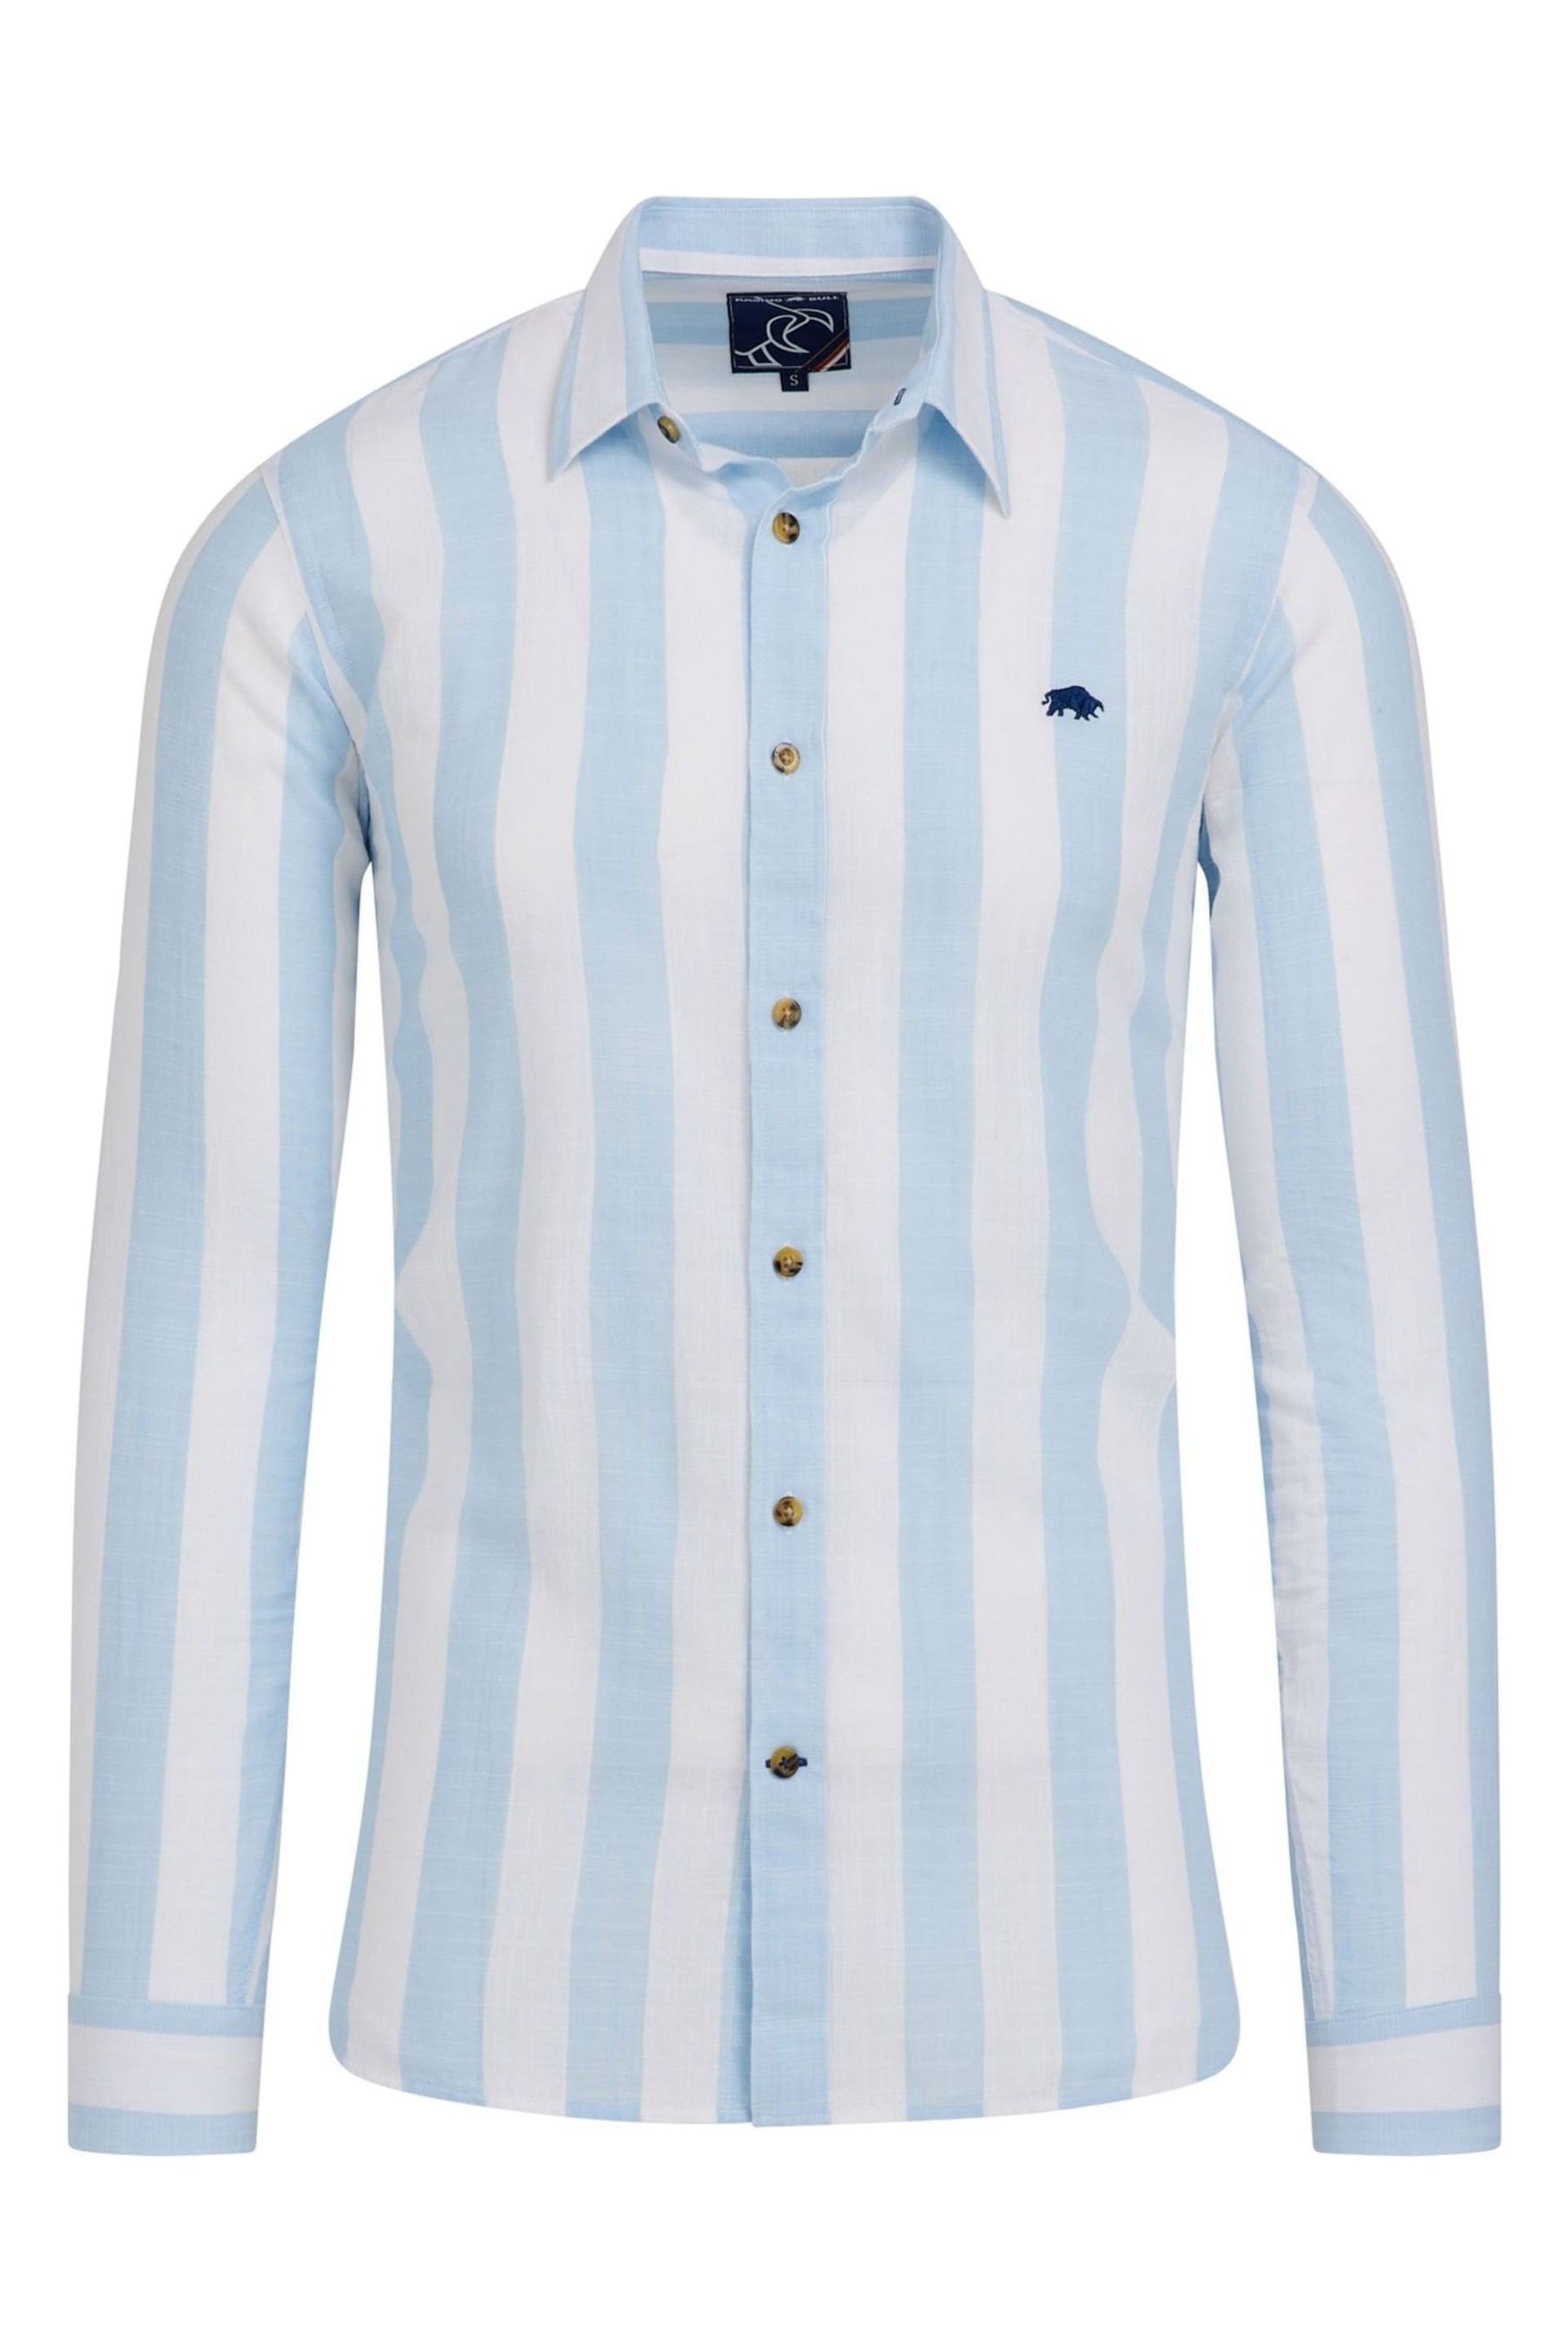 Raging Bull Blue Long Sleeve Wide Stripe Linen Look Shirt - Image 7 of 7